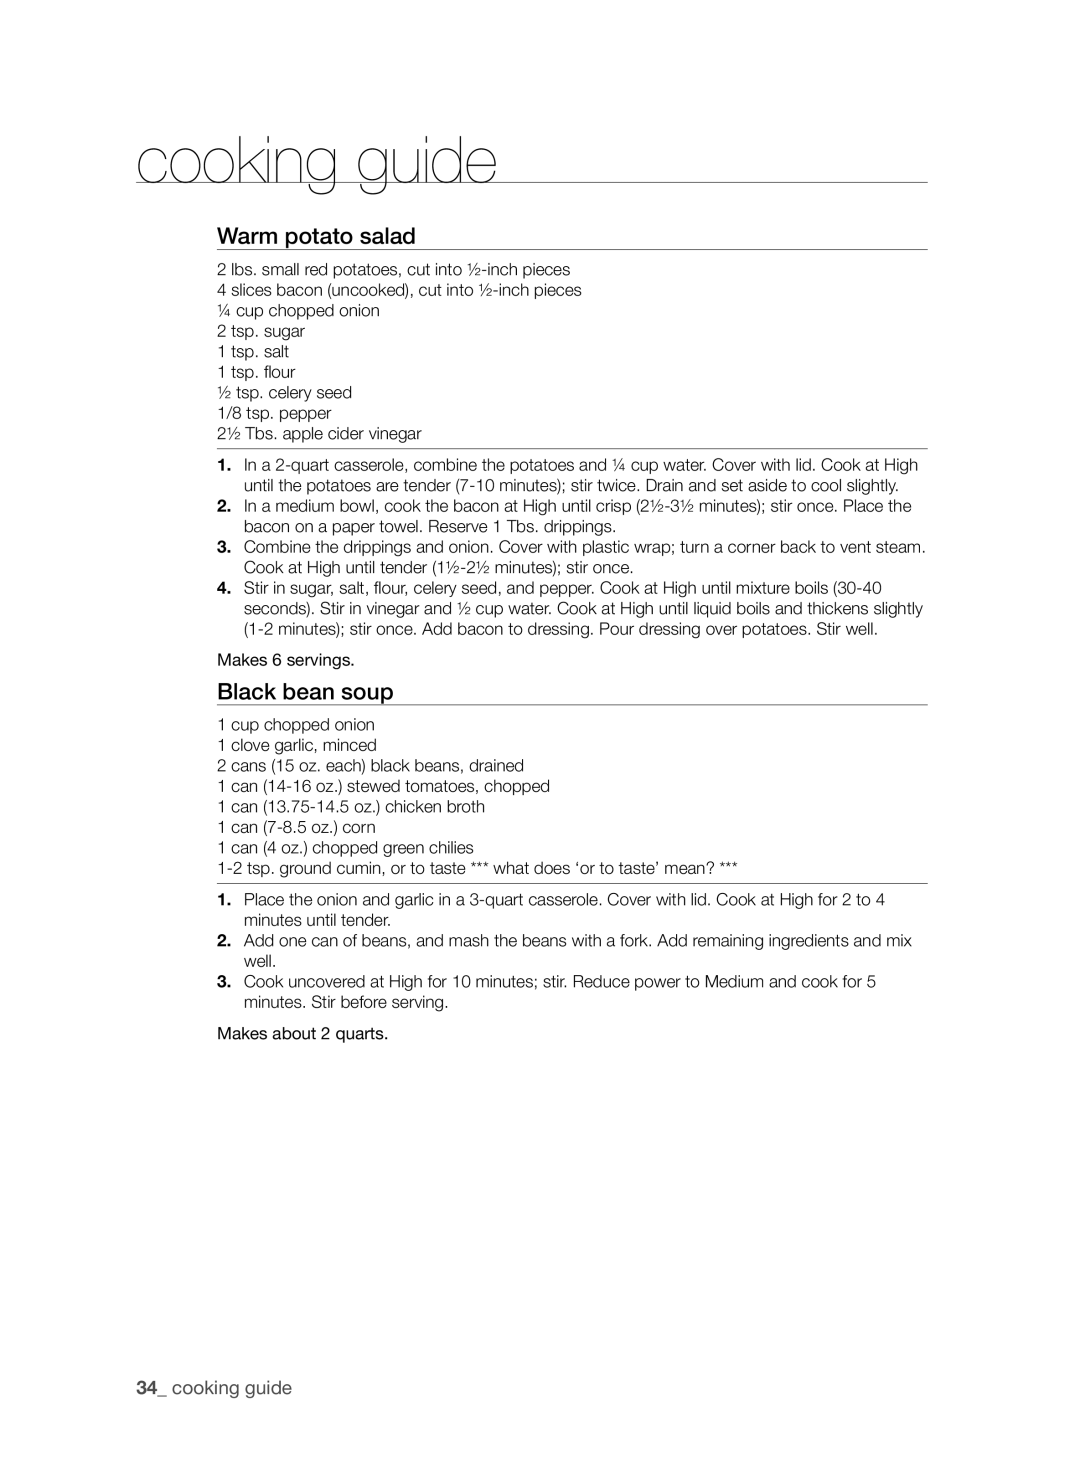 Samsung SMH7185 user manual cooking guide, Warm potato salad, Black bean soup 